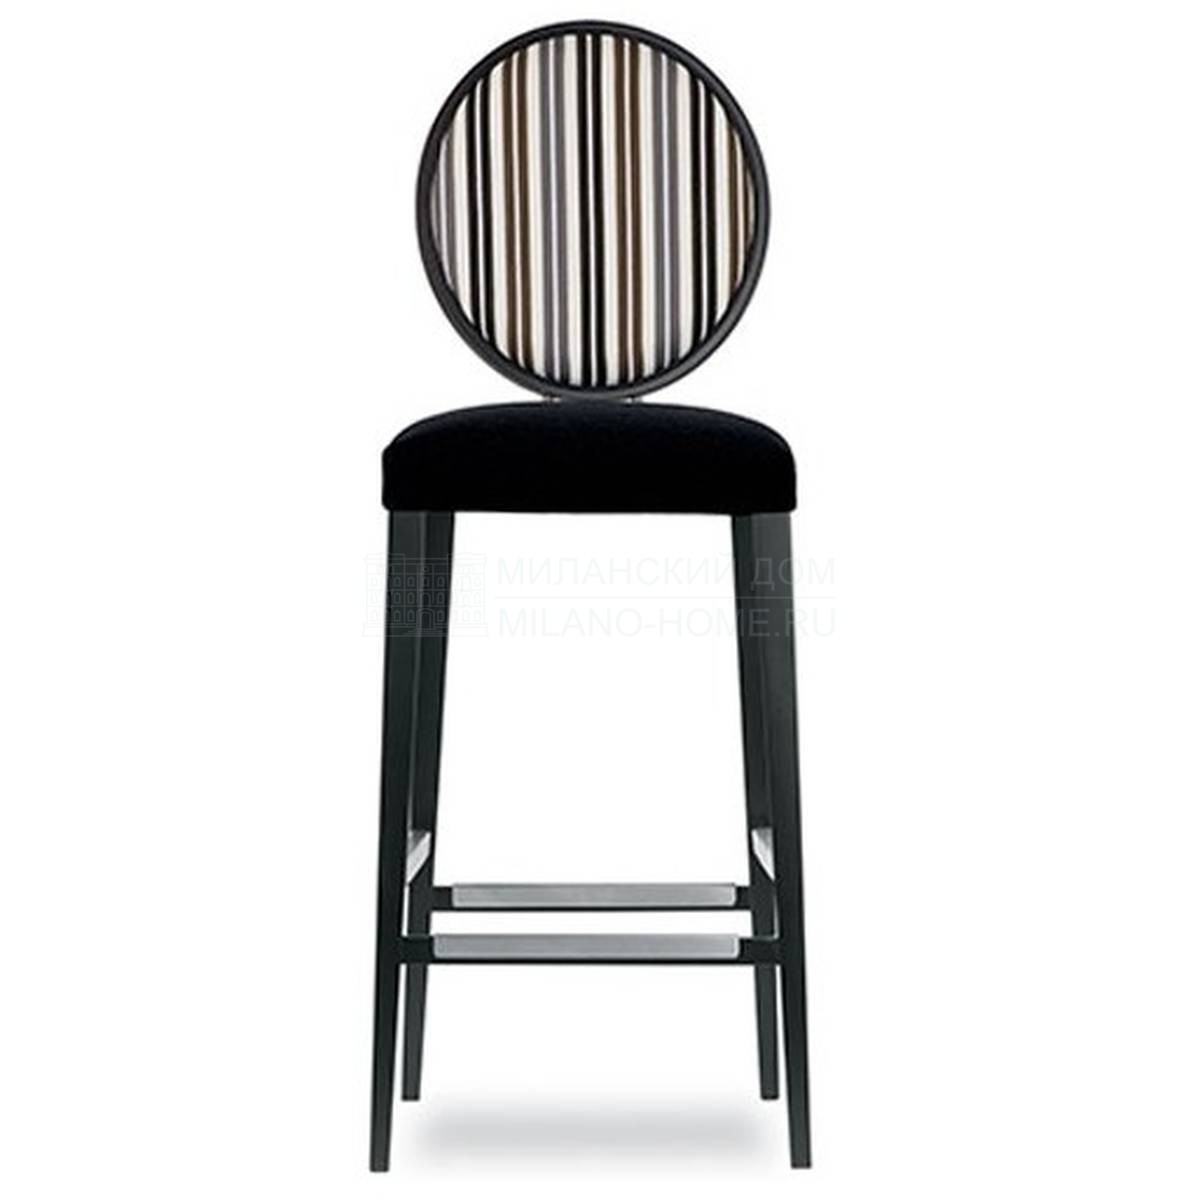 Барный стул Re sole stool из Италии фабрики TONON